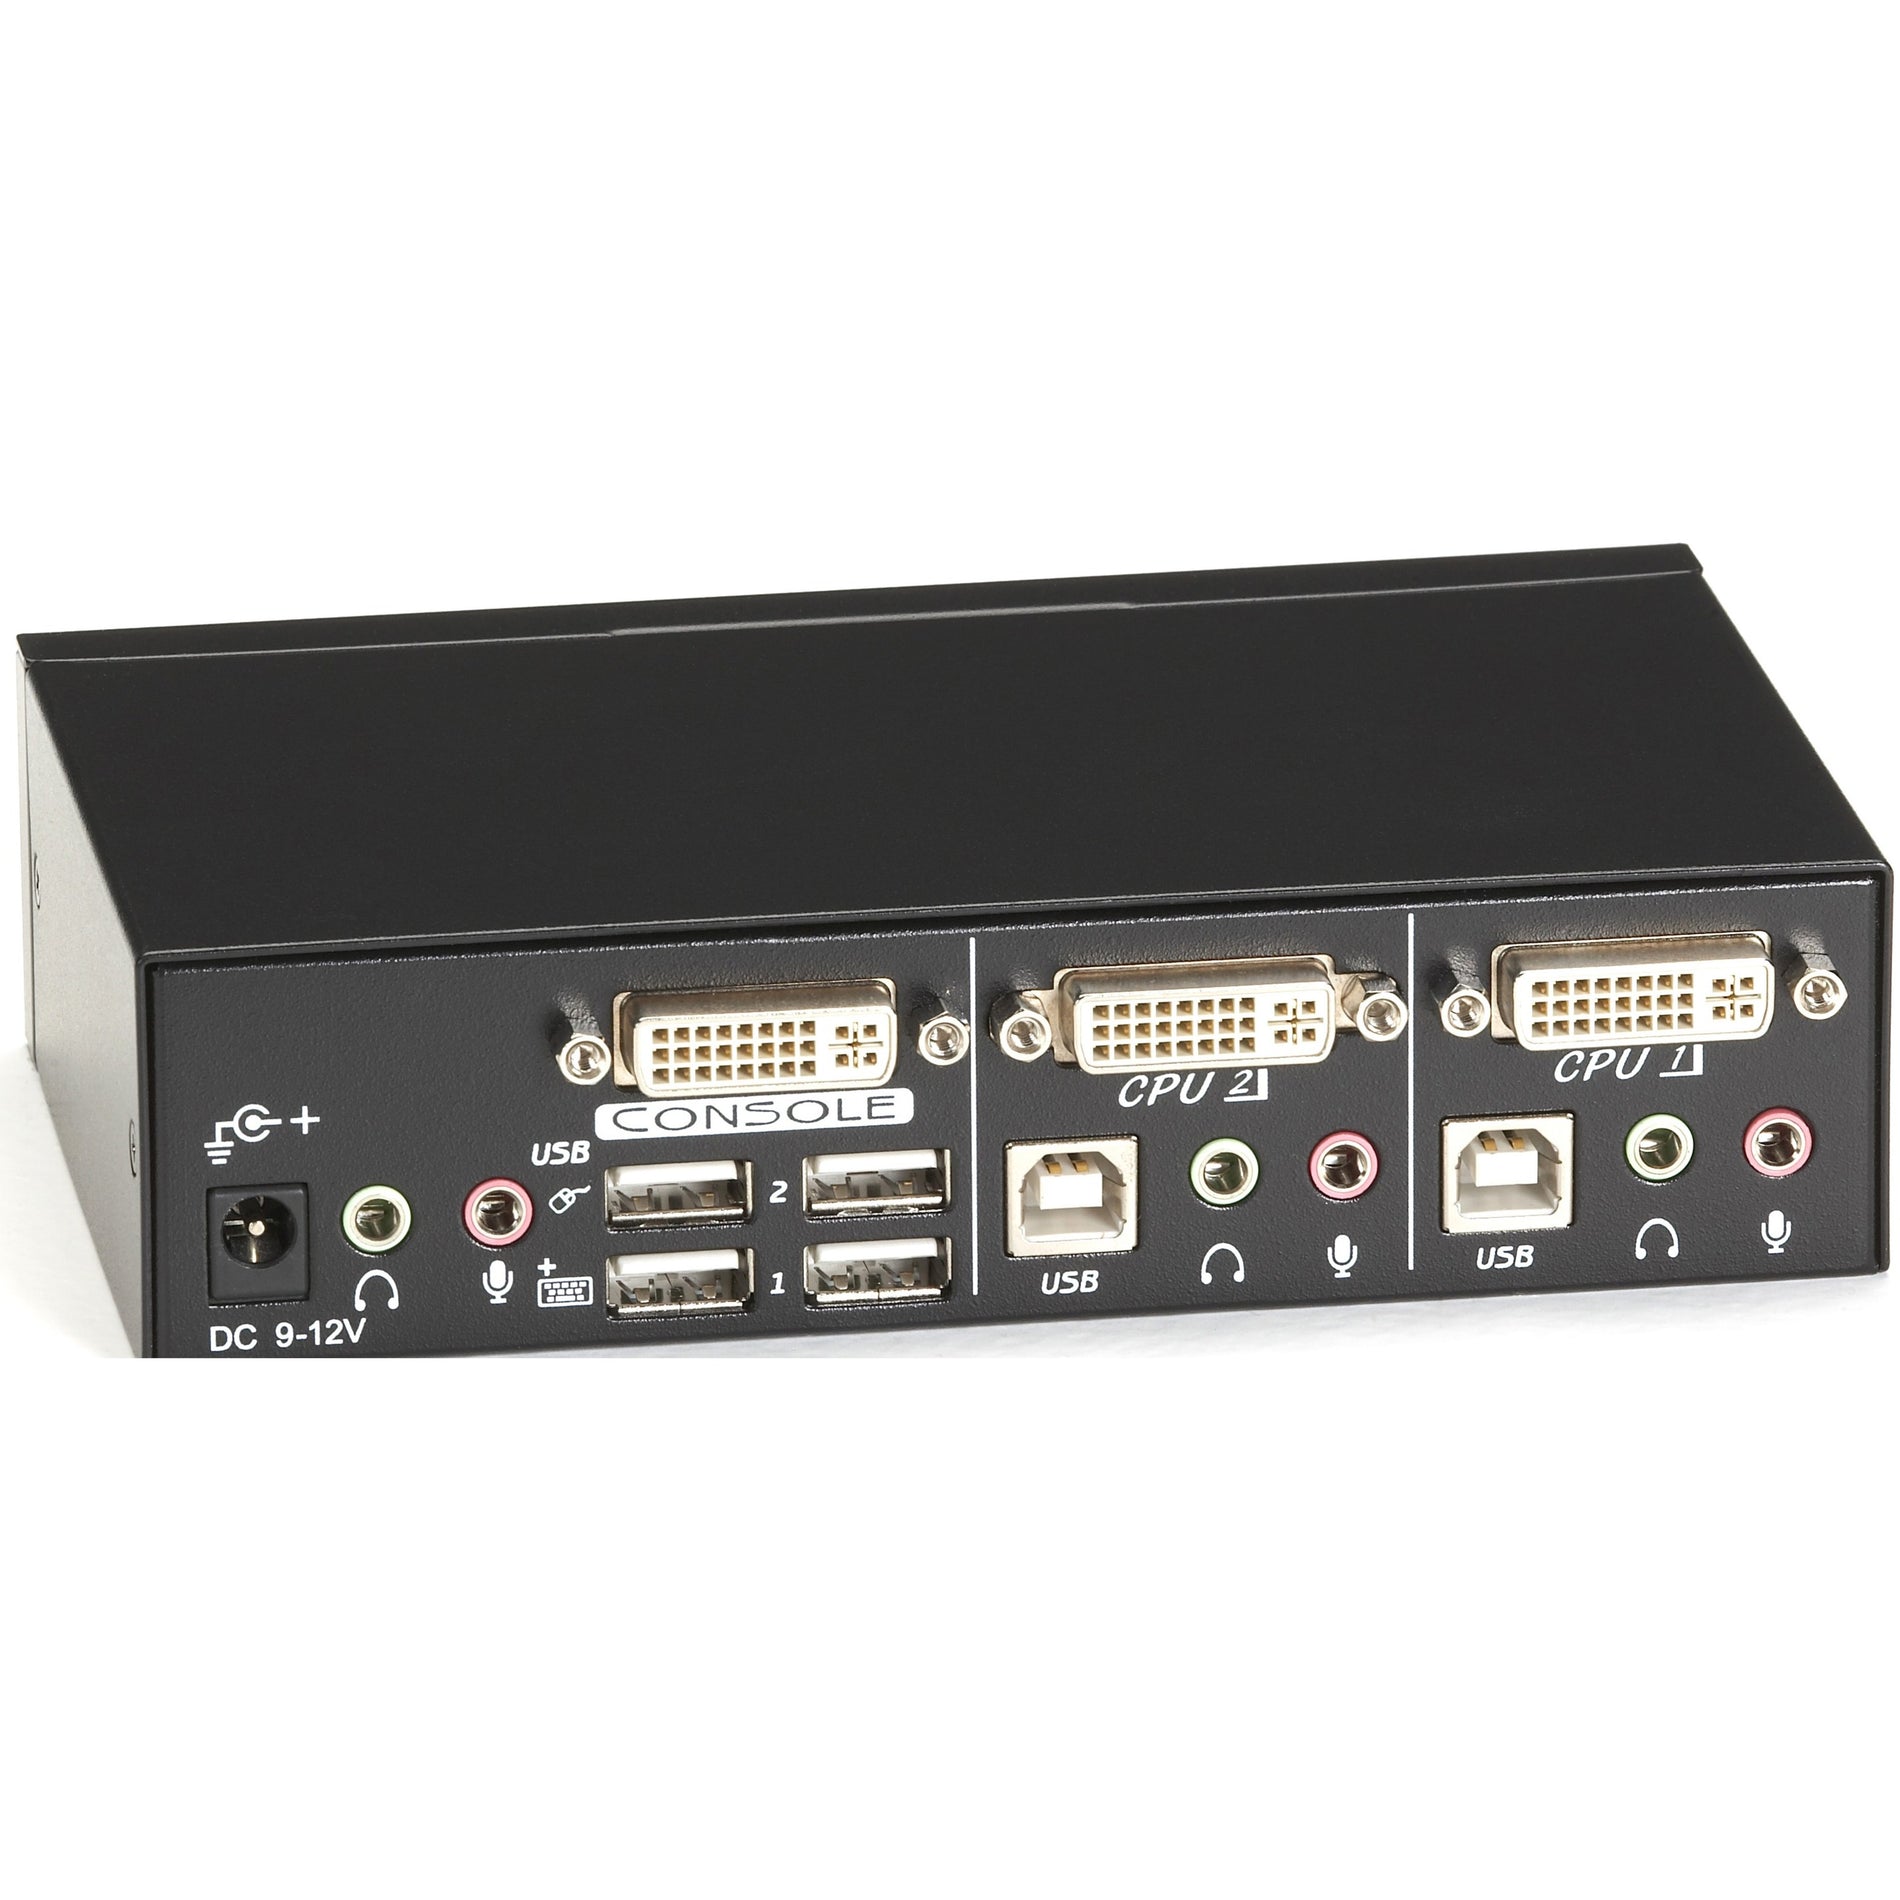 Black Box KV9612A ServSwitch DT DVI 2-Port with Emulated USB Keyboard/Mouse, WUXGA, 1920 x 1200, 1 Year Warranty